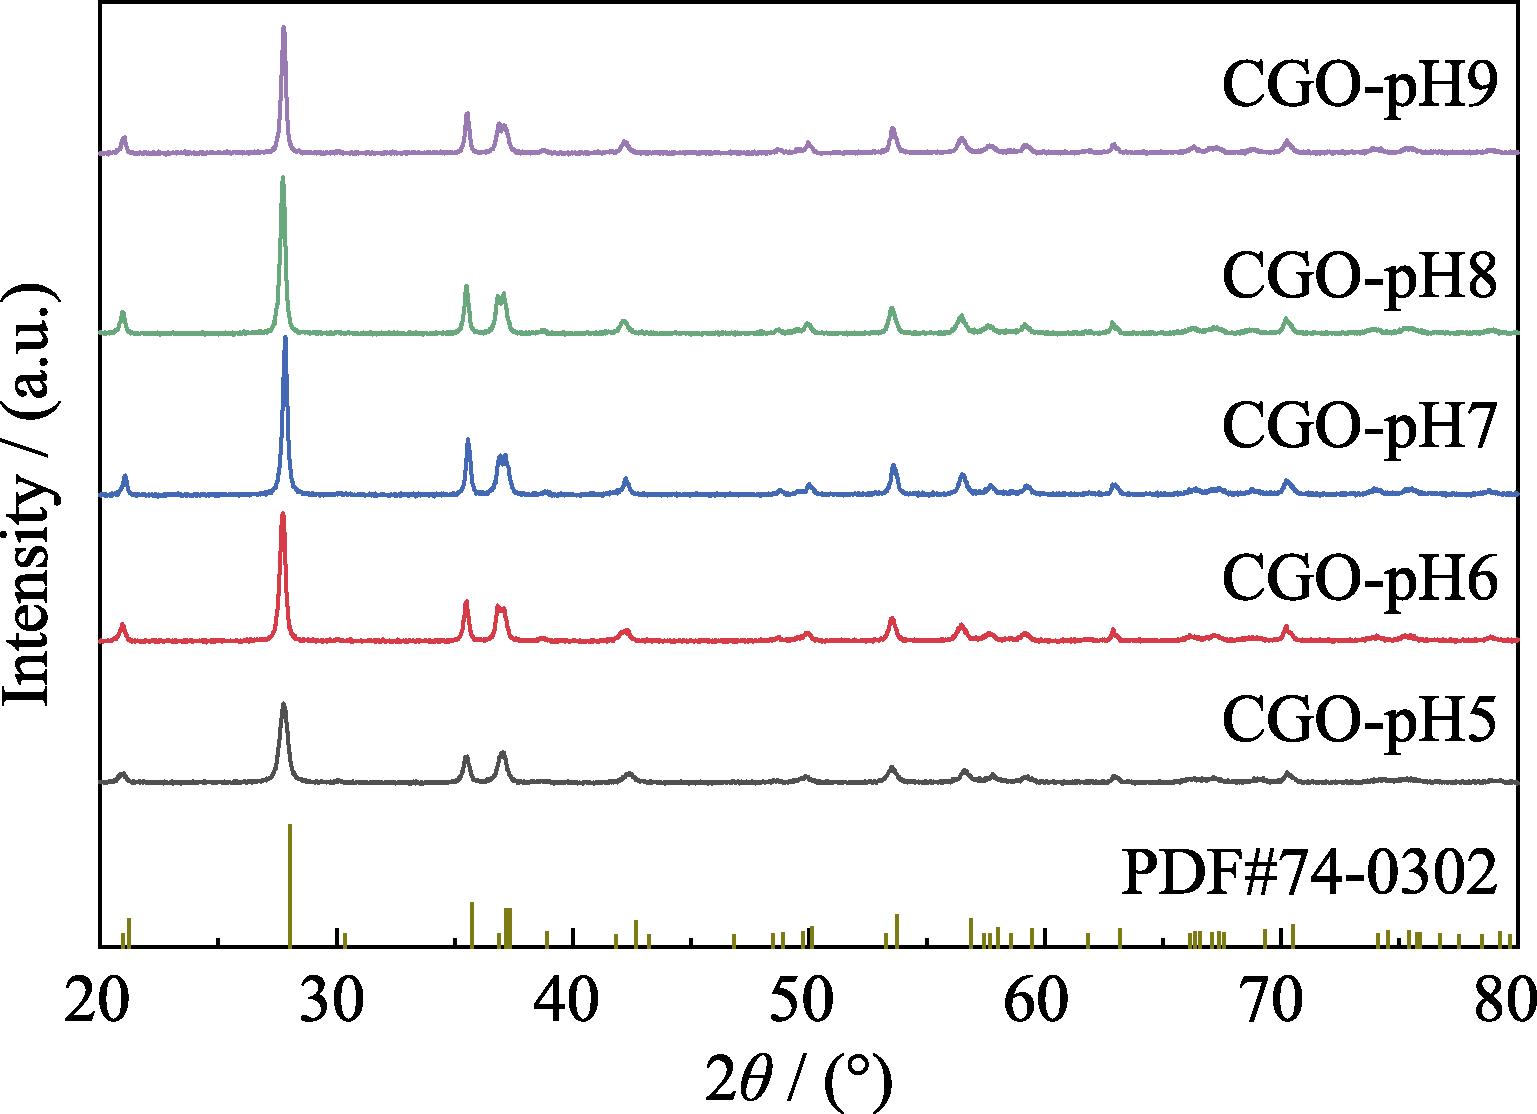 XRD patterns of CGO-pH series samples